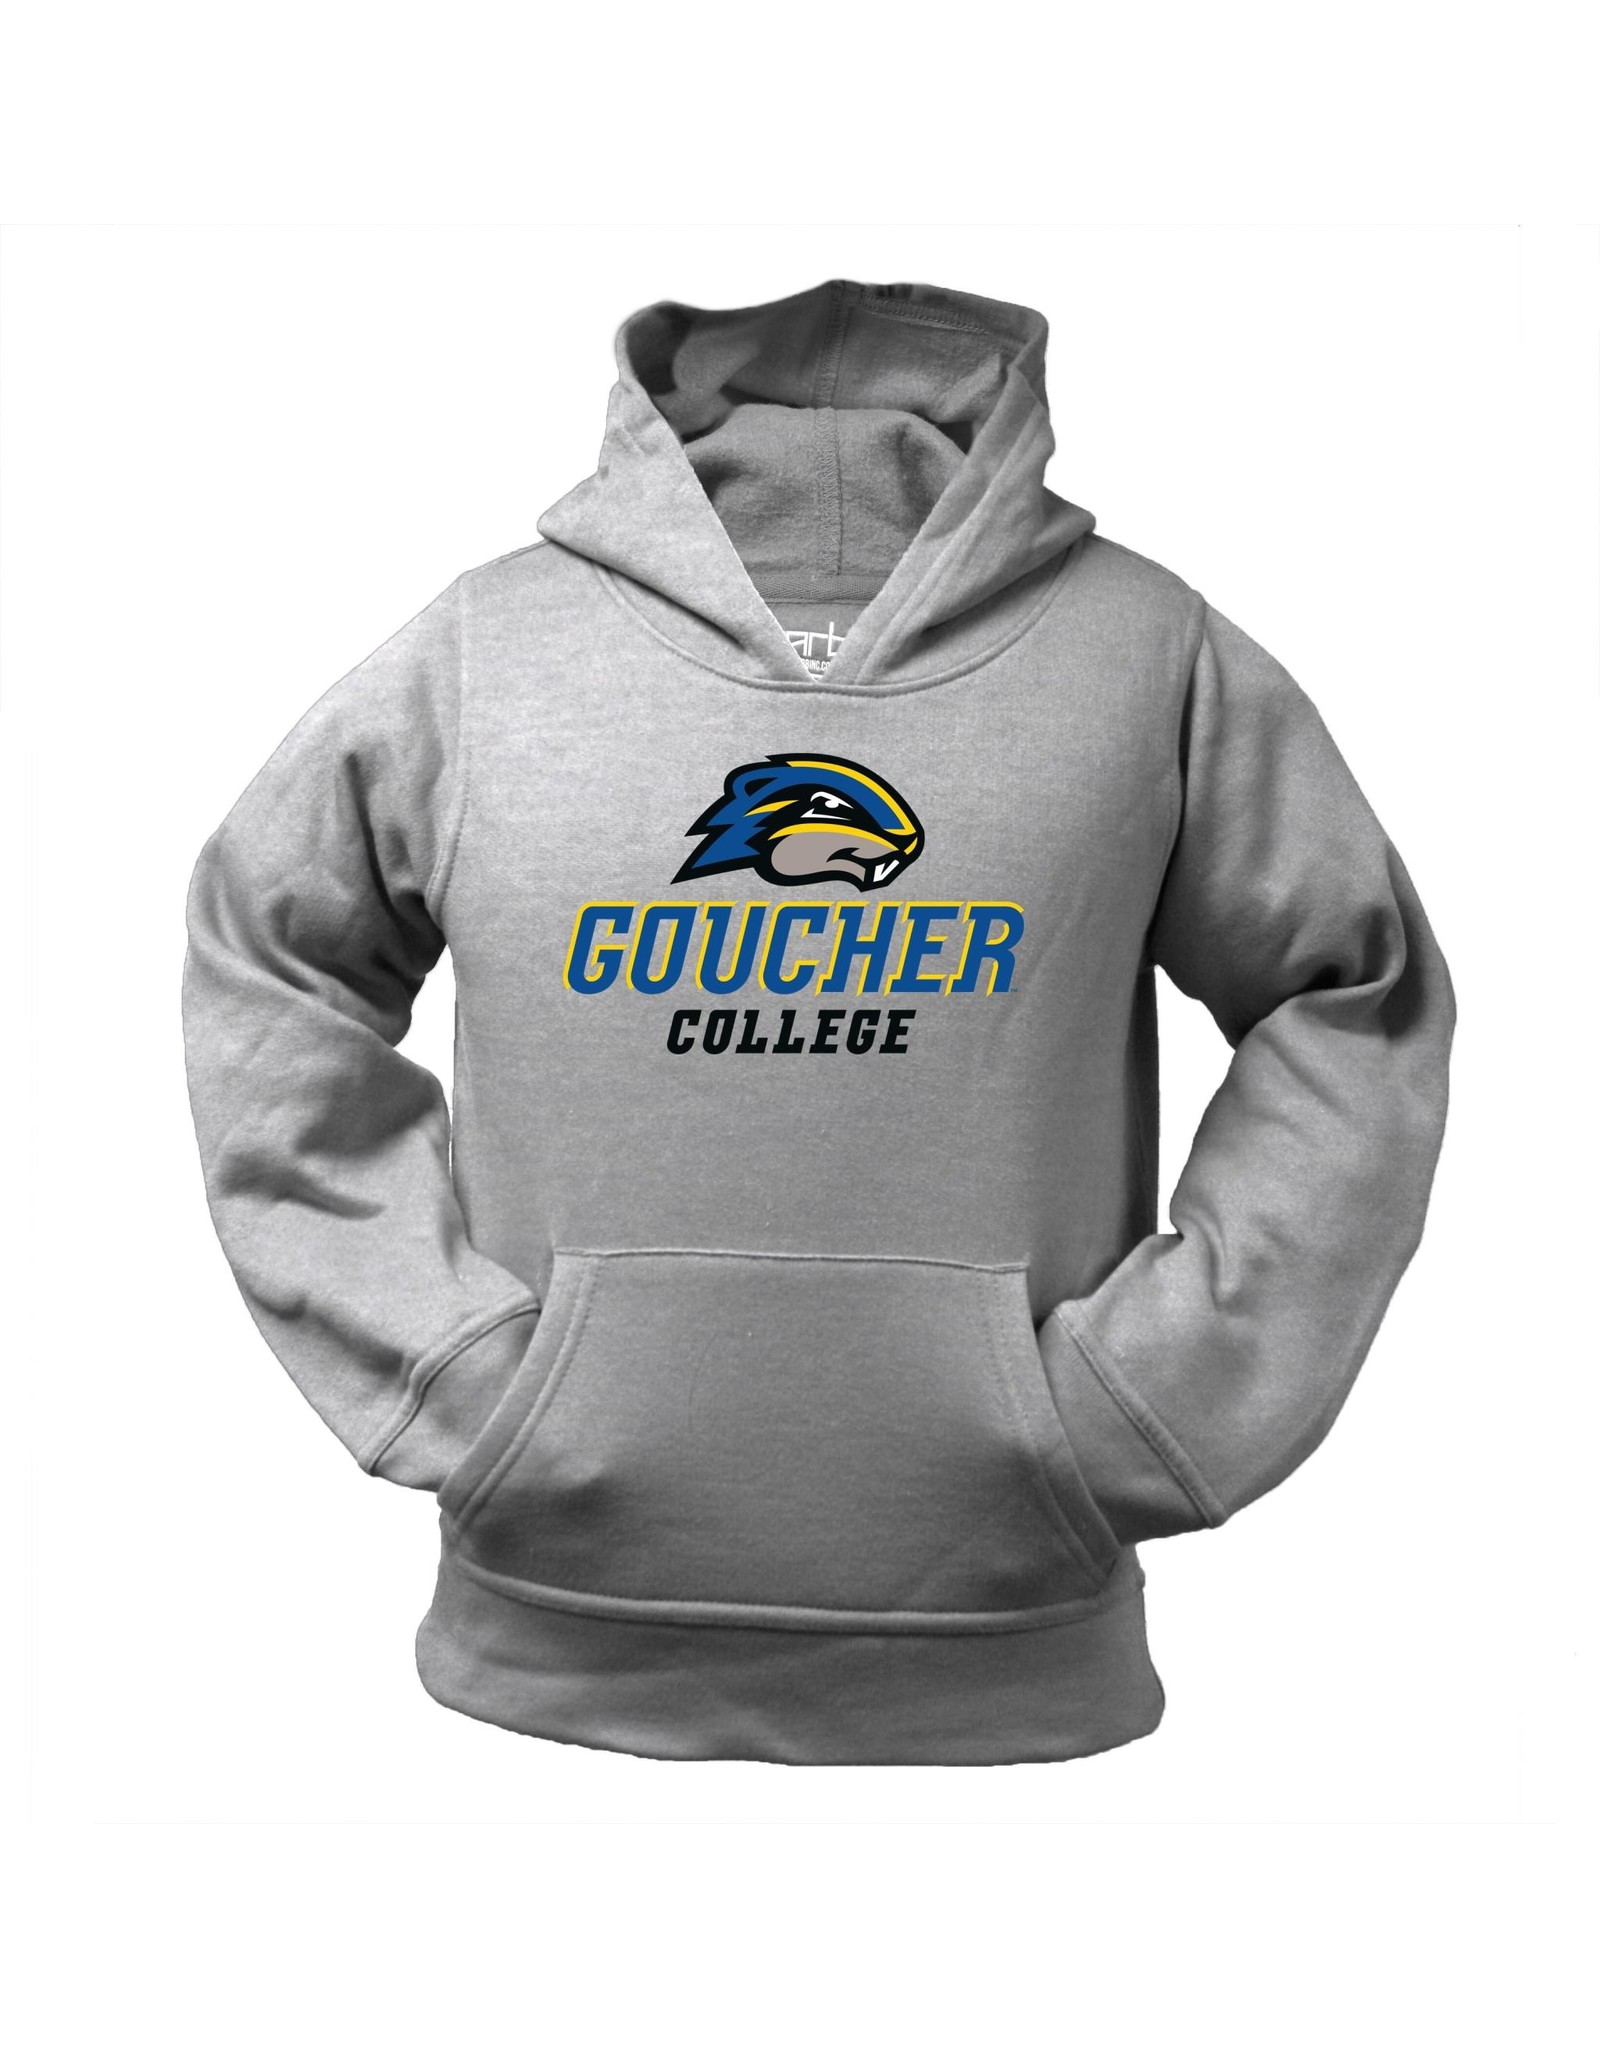 Garb Youth Pullover Hoodie "Goucher College w/ Gopher"